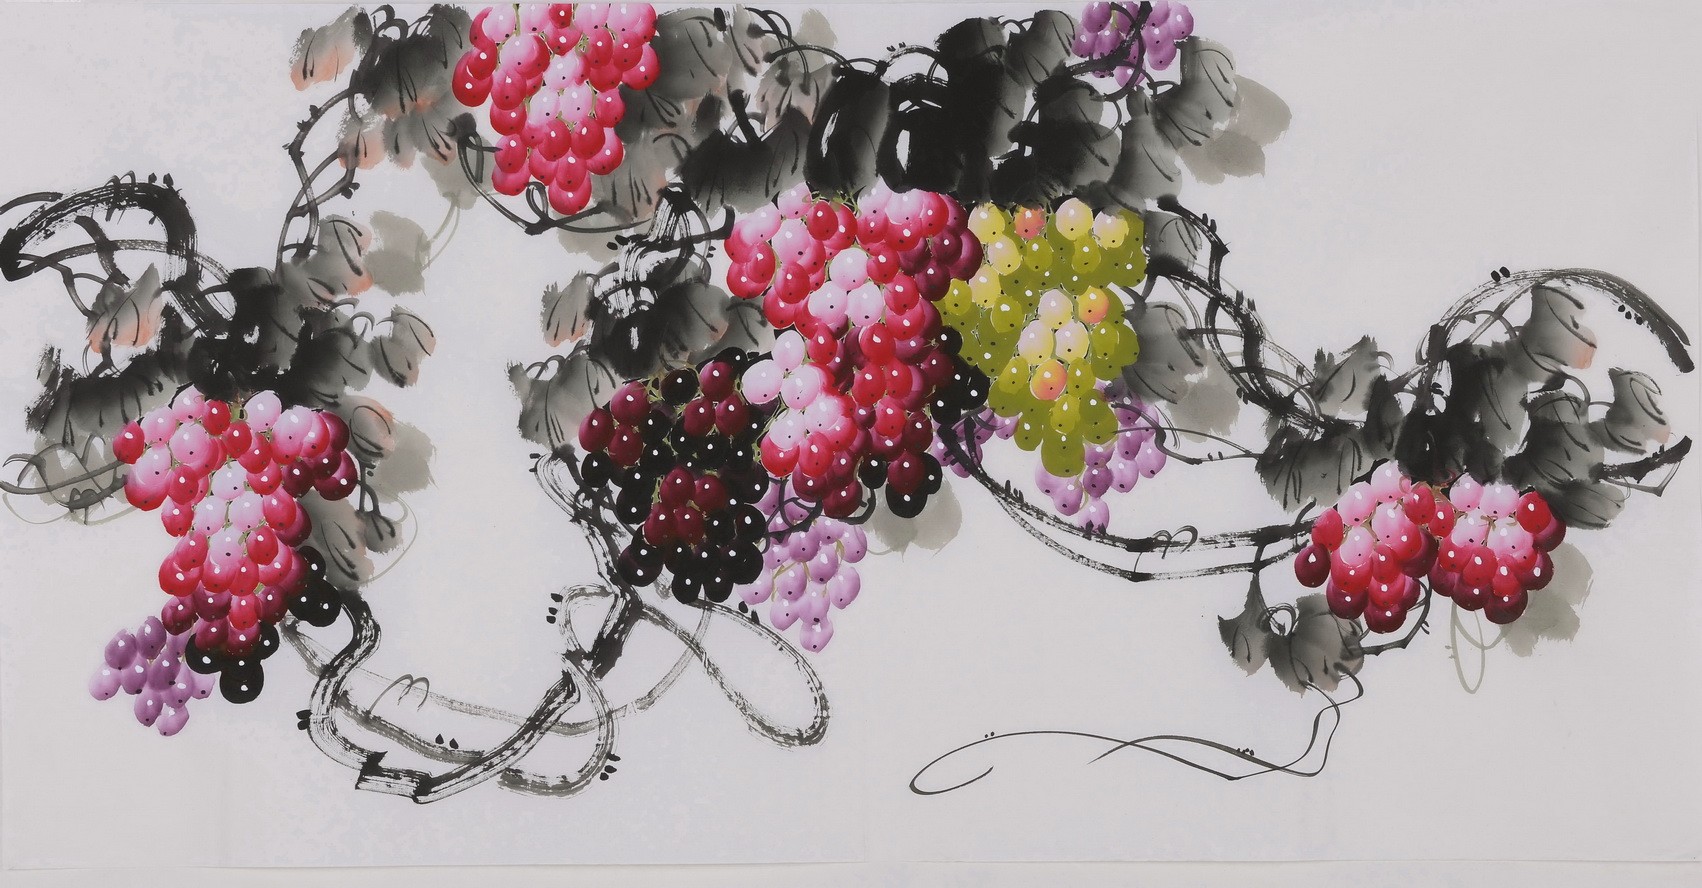 Grapes - CNAG003415